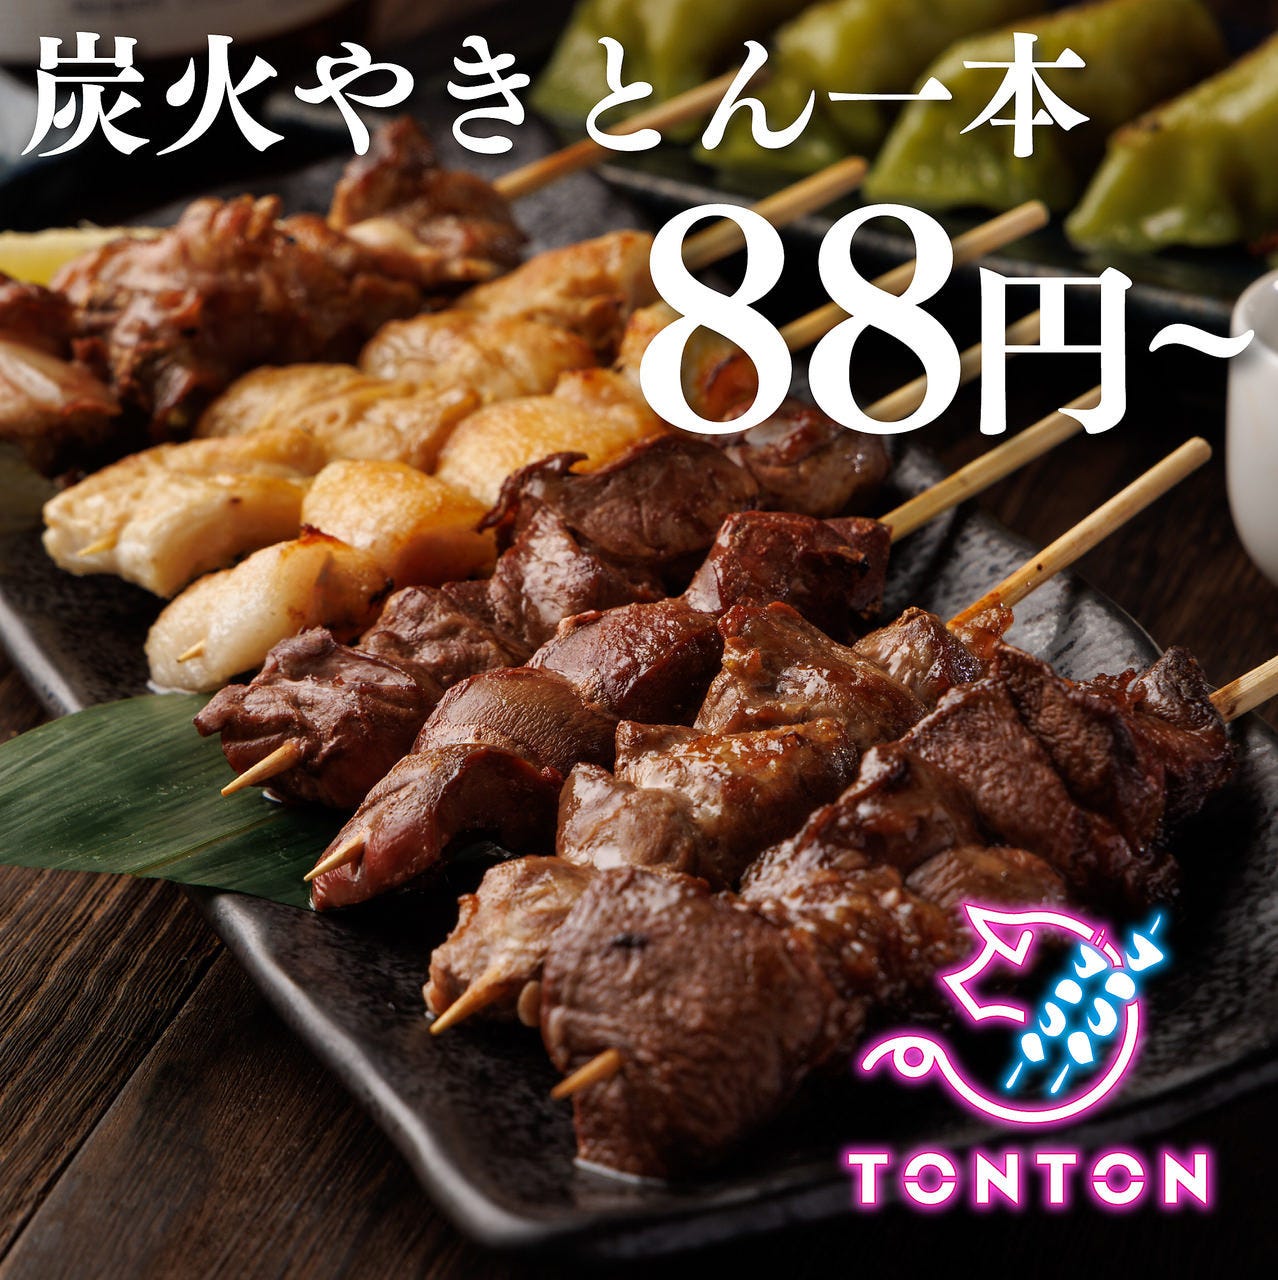 完全個室 炭火串焼居酒屋 TONTON(トントン)上野駅前本店